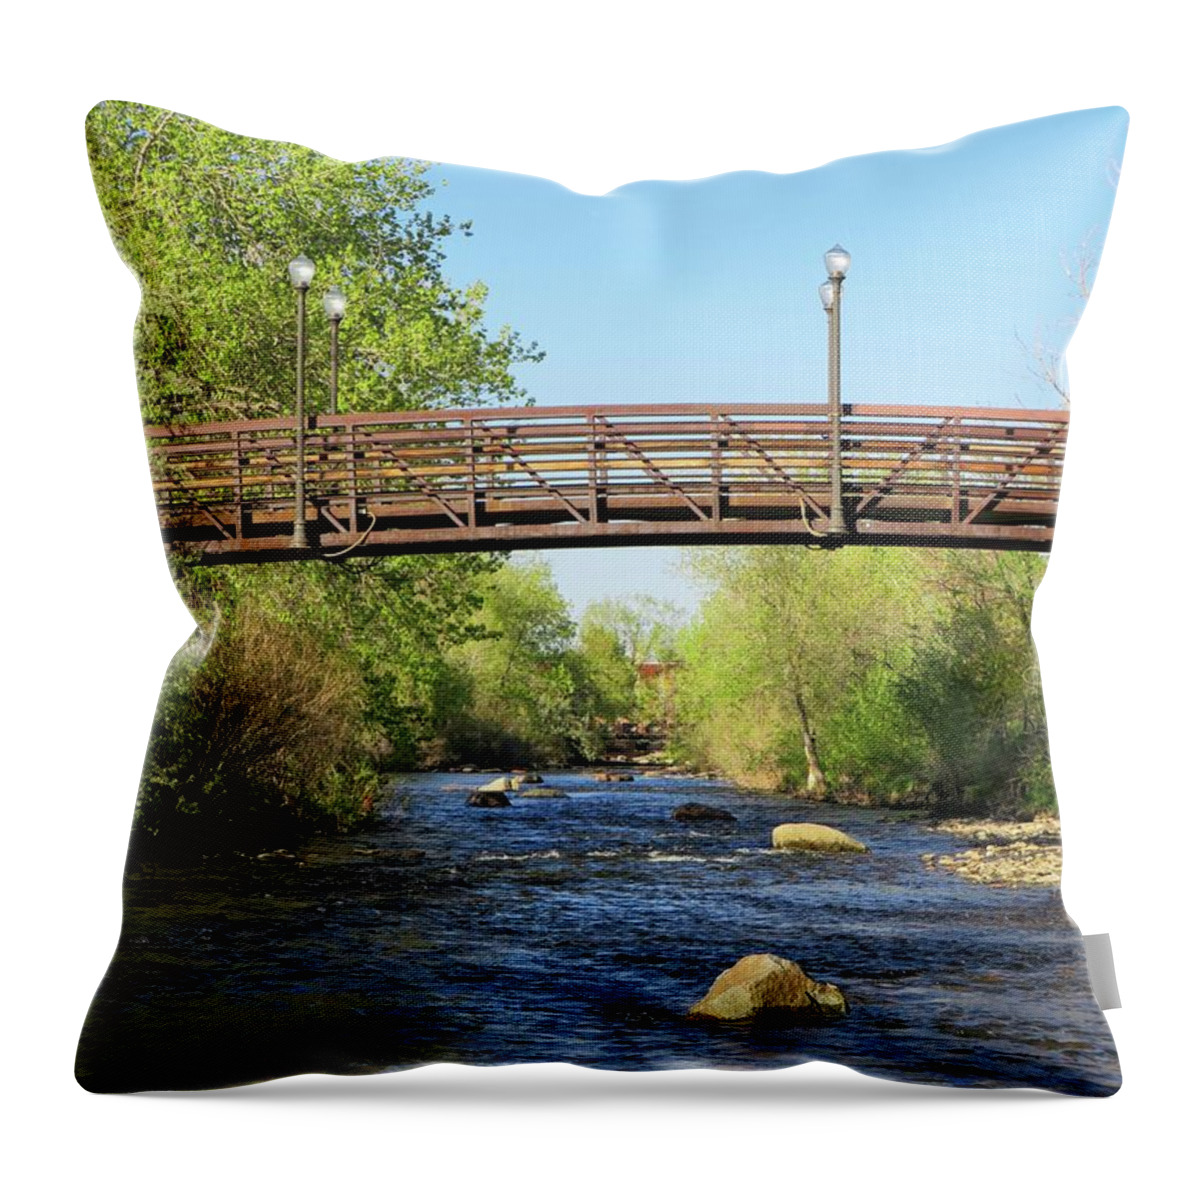 Bridge Throw Pillow featuring the photograph Footbridge by Connor Beekman